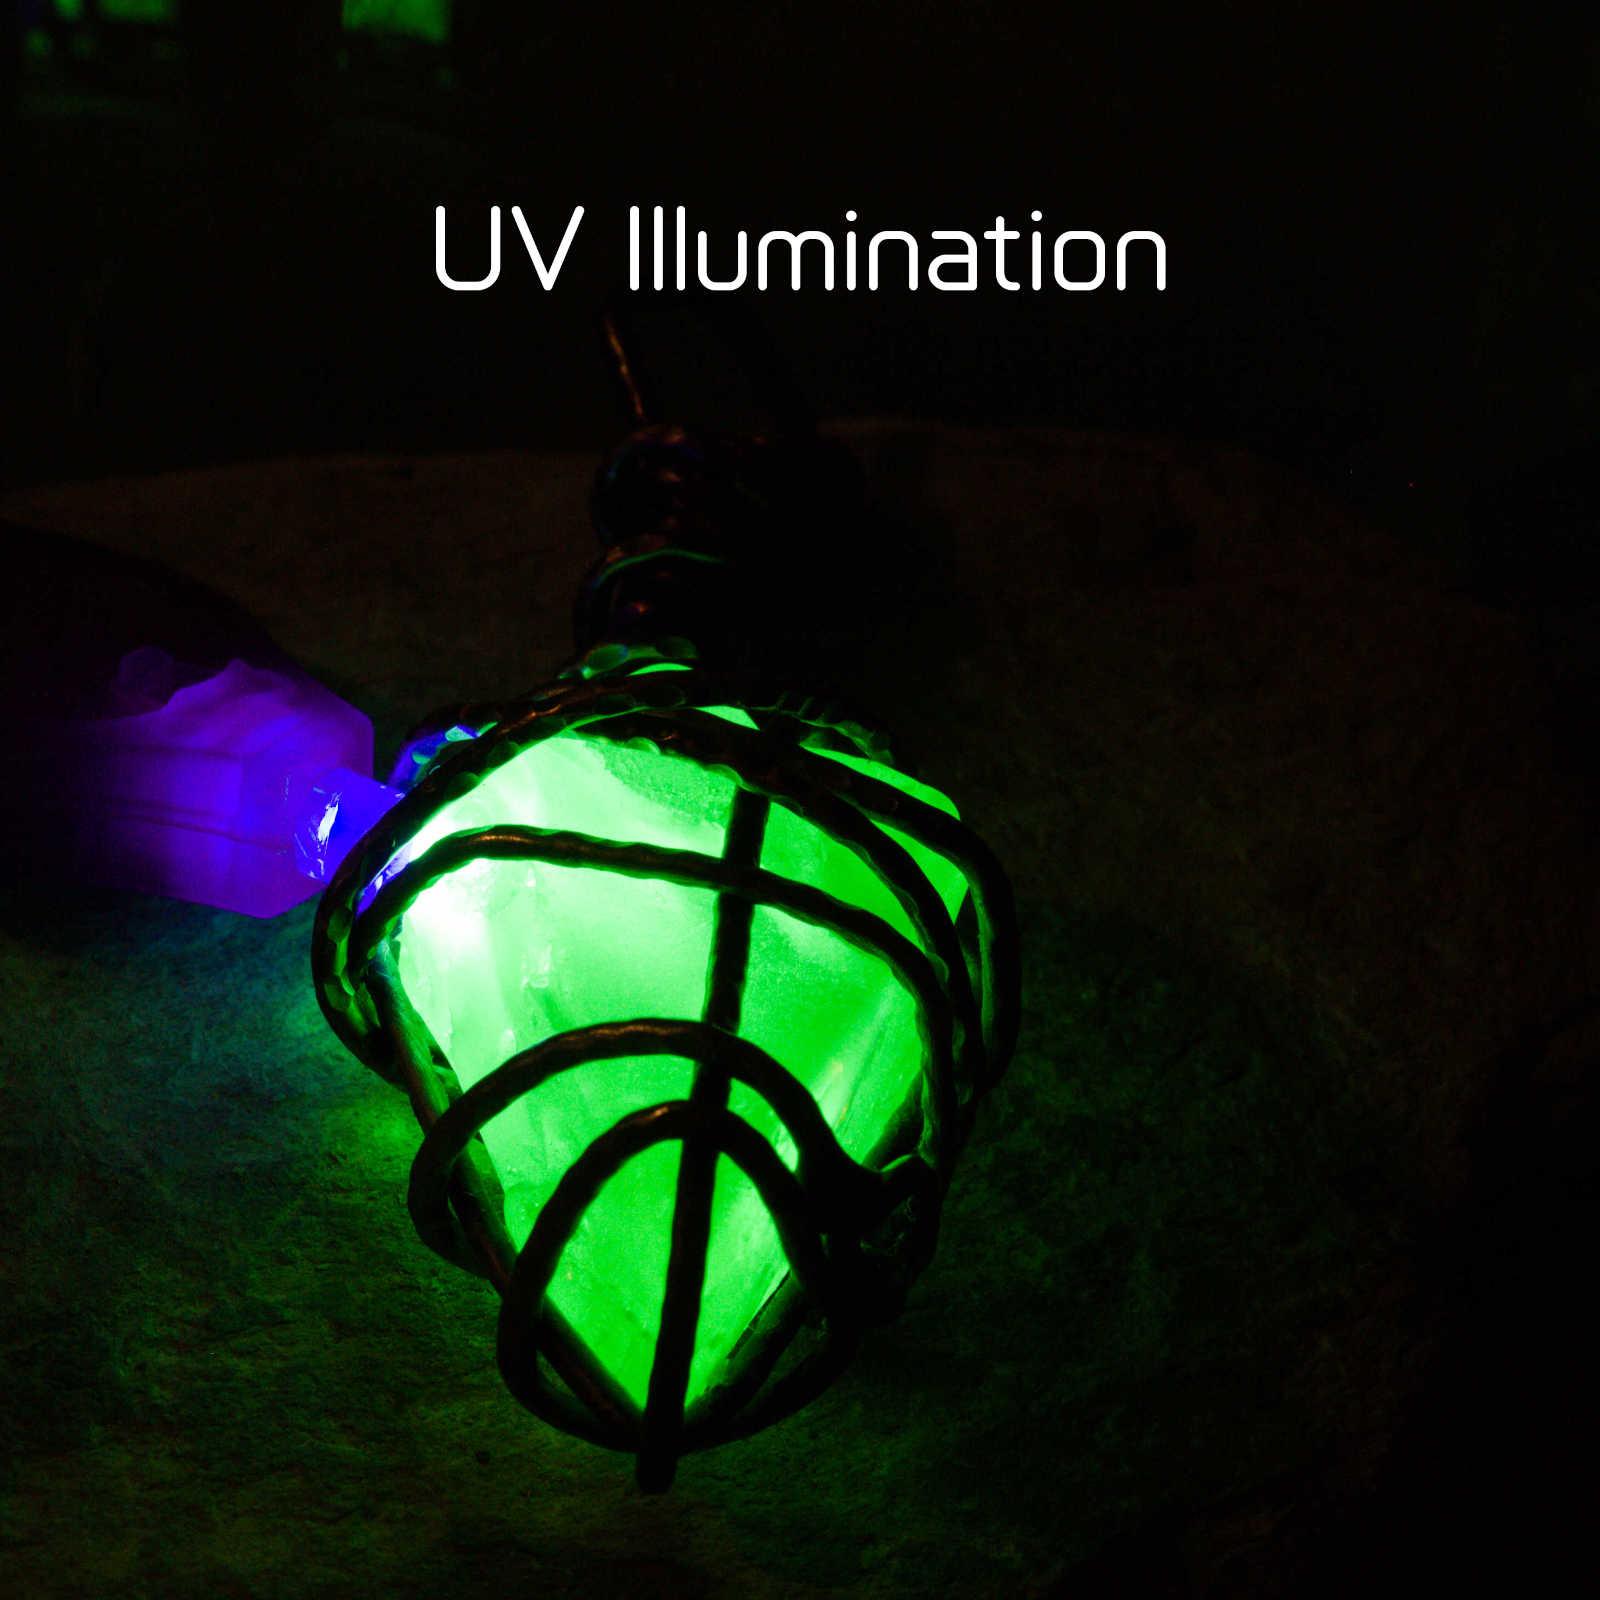 Uranium Glass under UV light